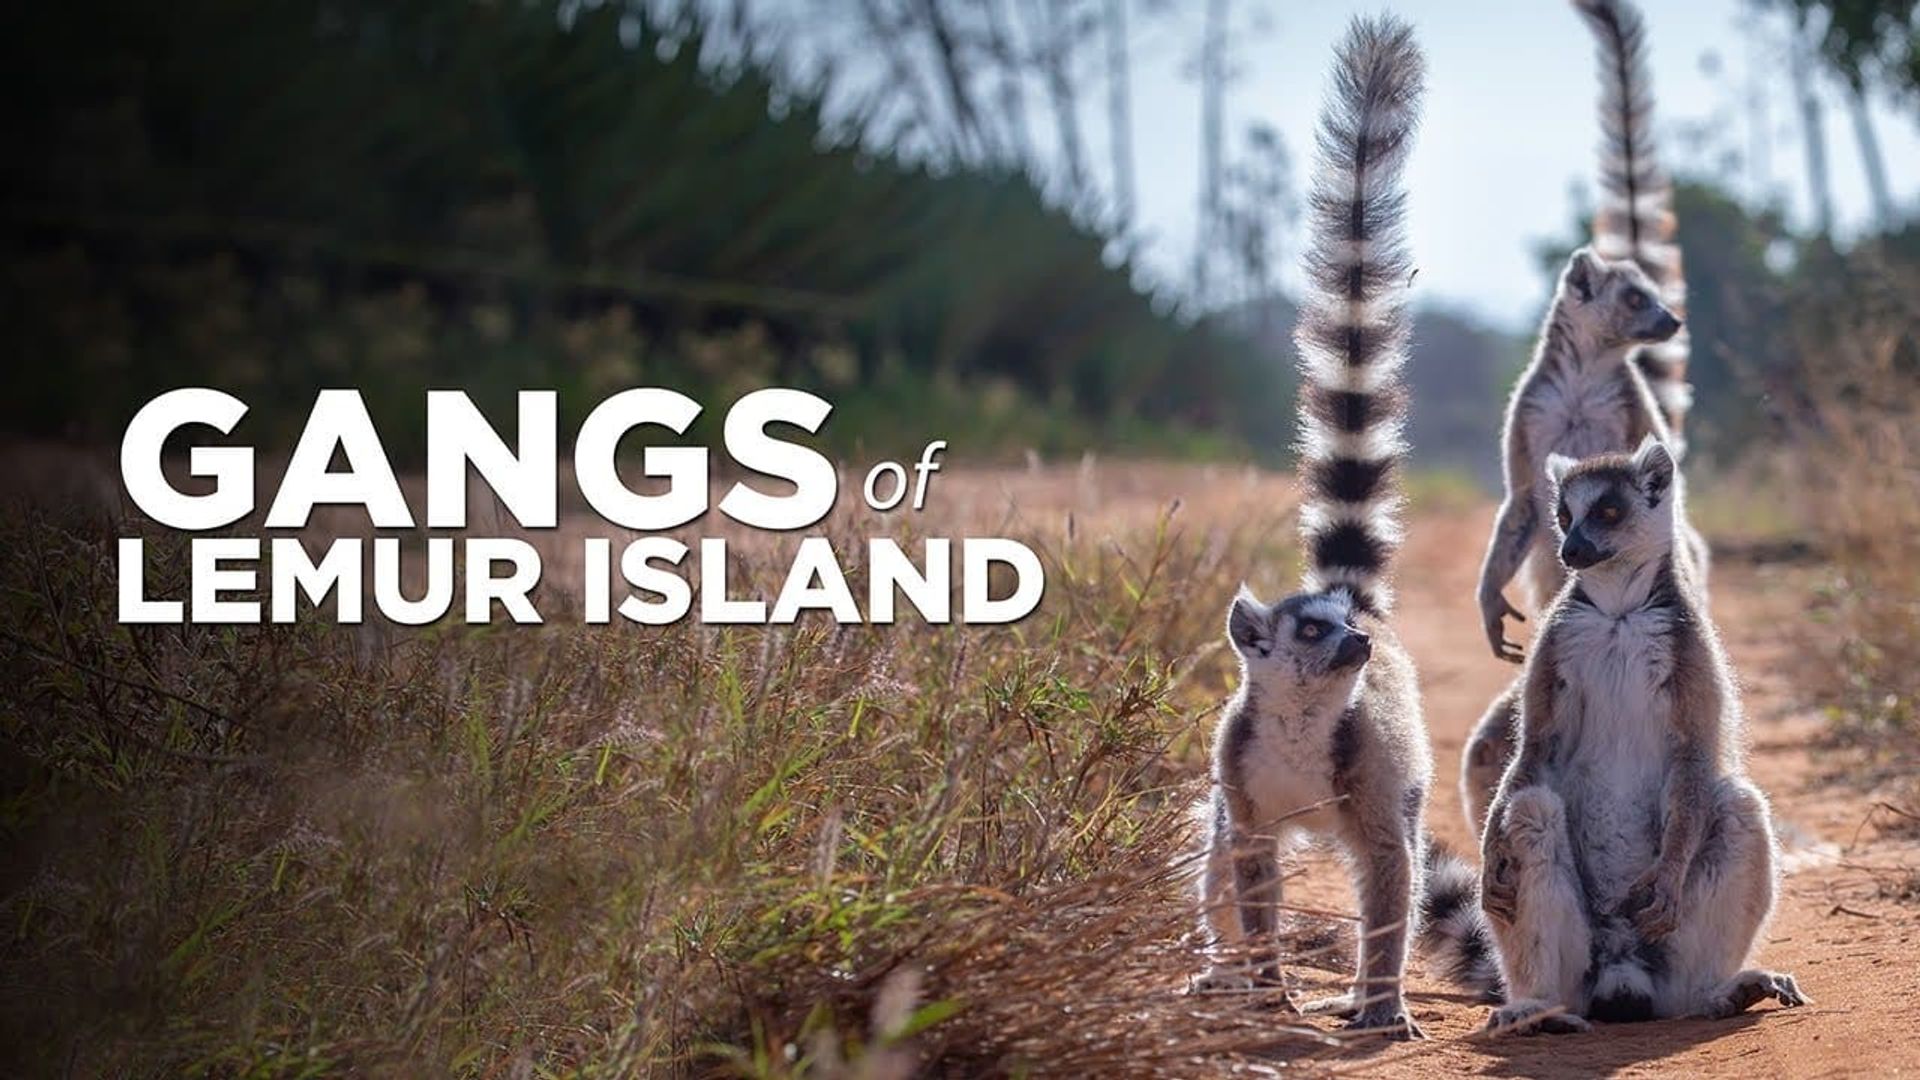 Gangs of Lemur Island background